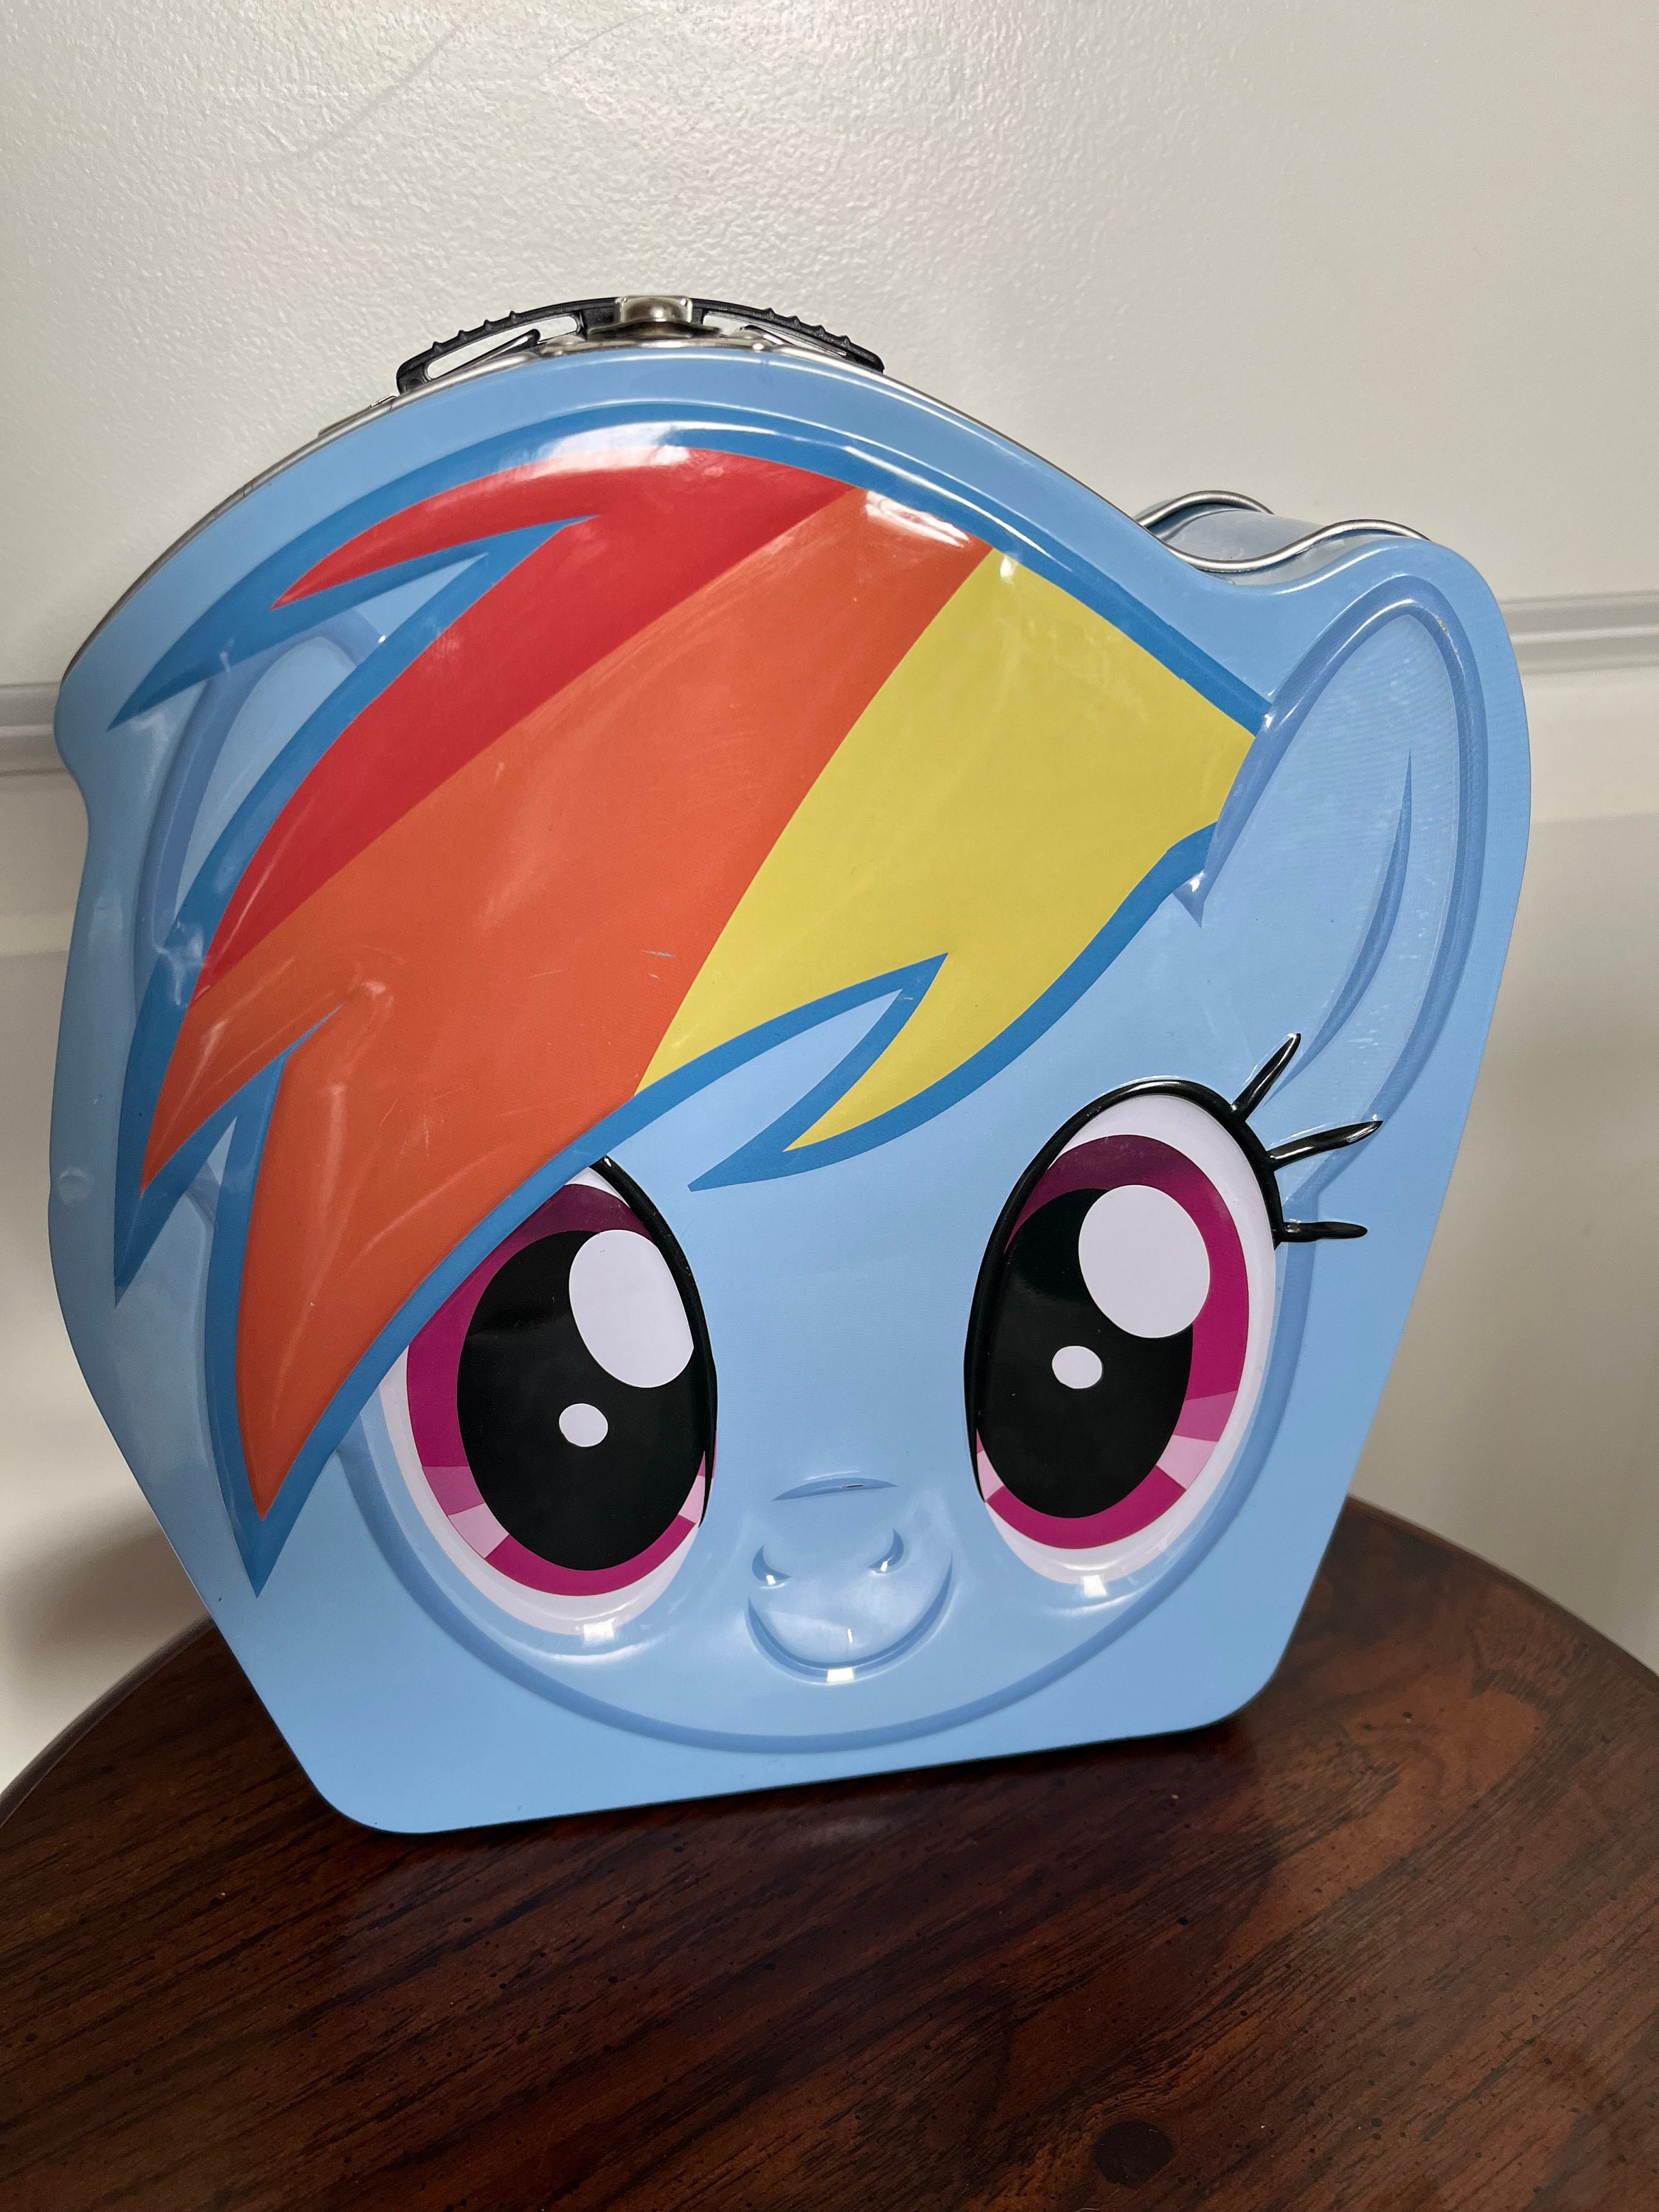 My Little Pony Girls School Backpack Lunch Box Set Rainbow Dash Pink Book  Bag